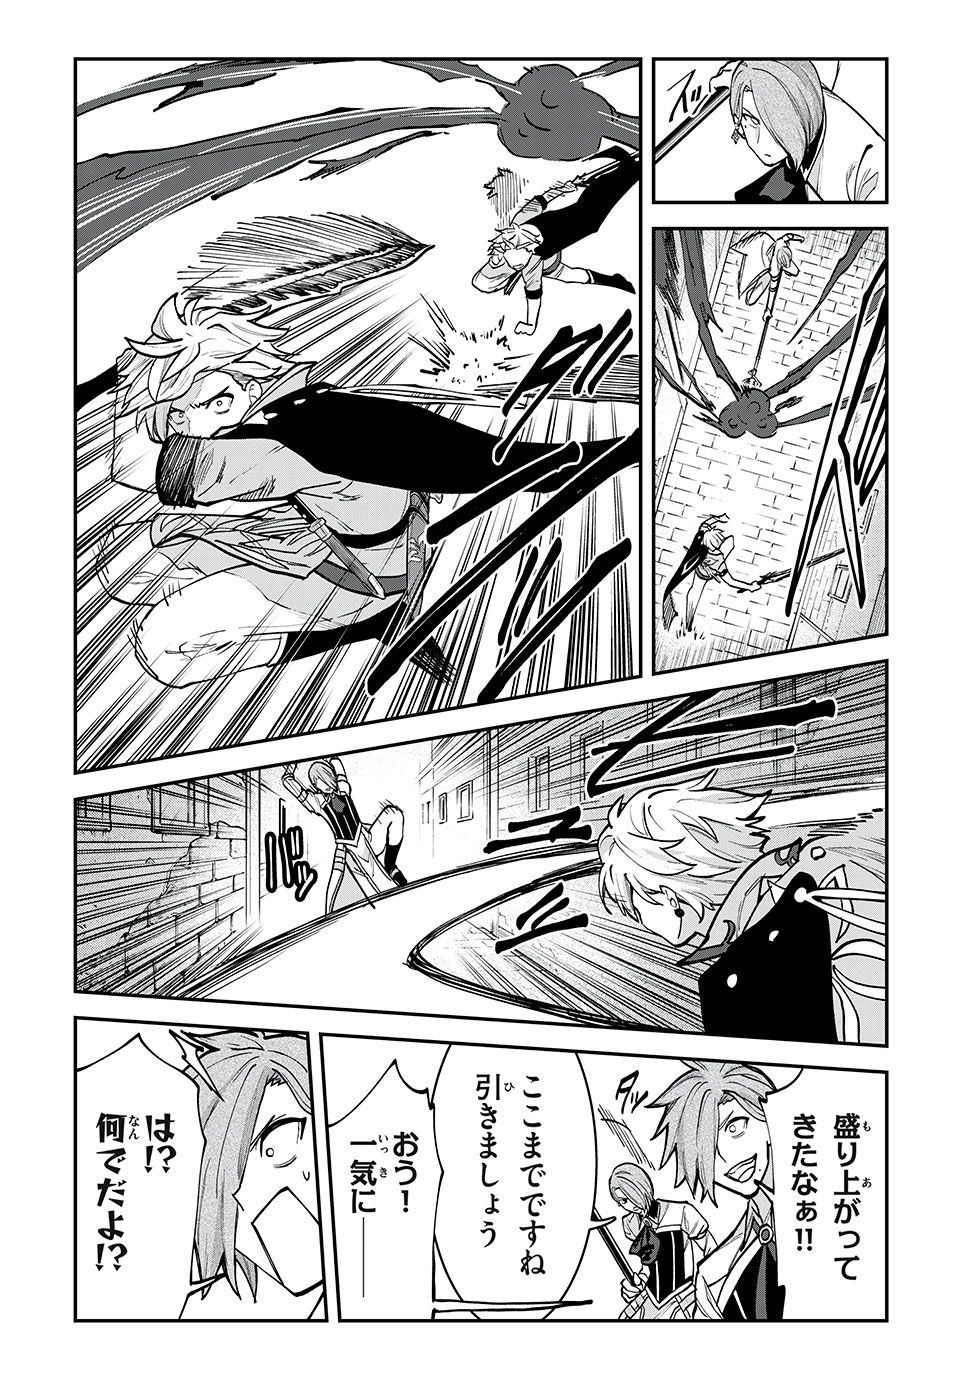 Tales of Crestoria – Togabito no Saika - Chapter 30 - Page 3